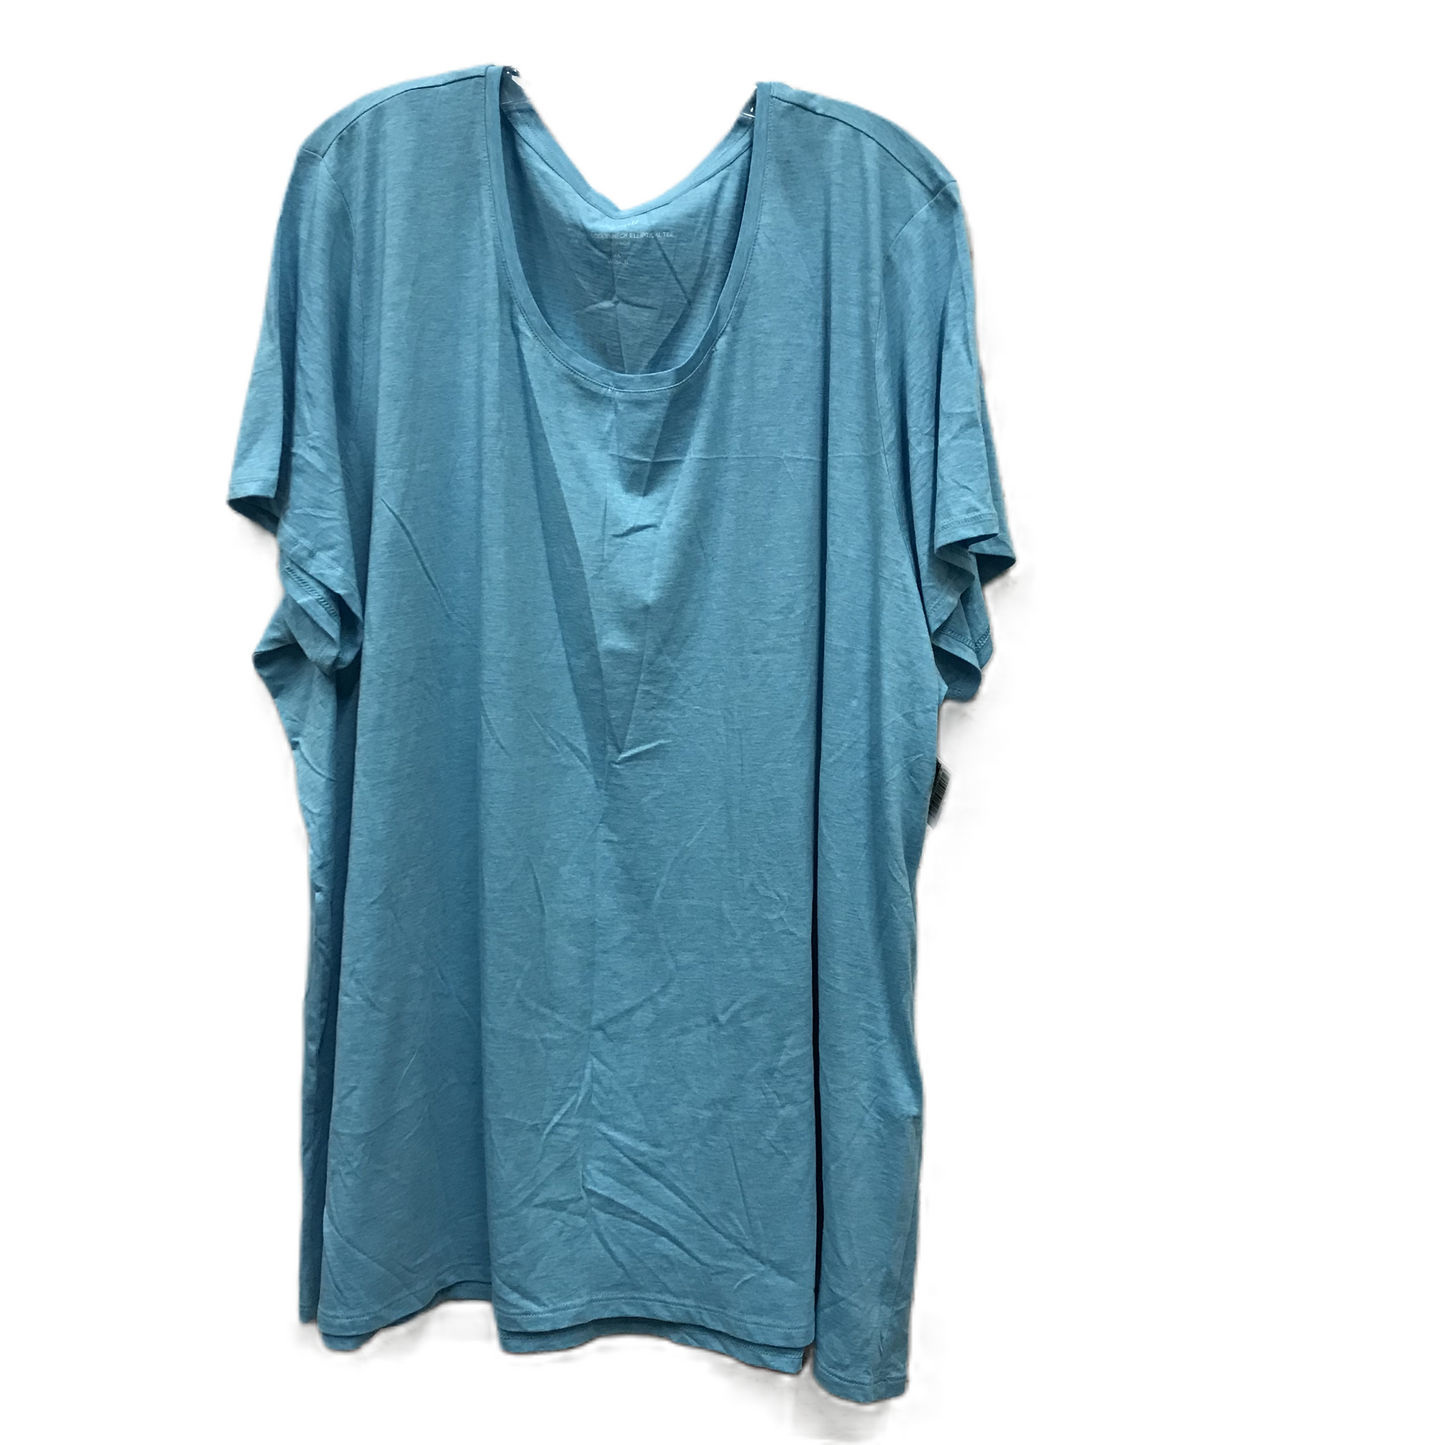 Blue Top Short Sleeve By J. Jill, Size: 4x